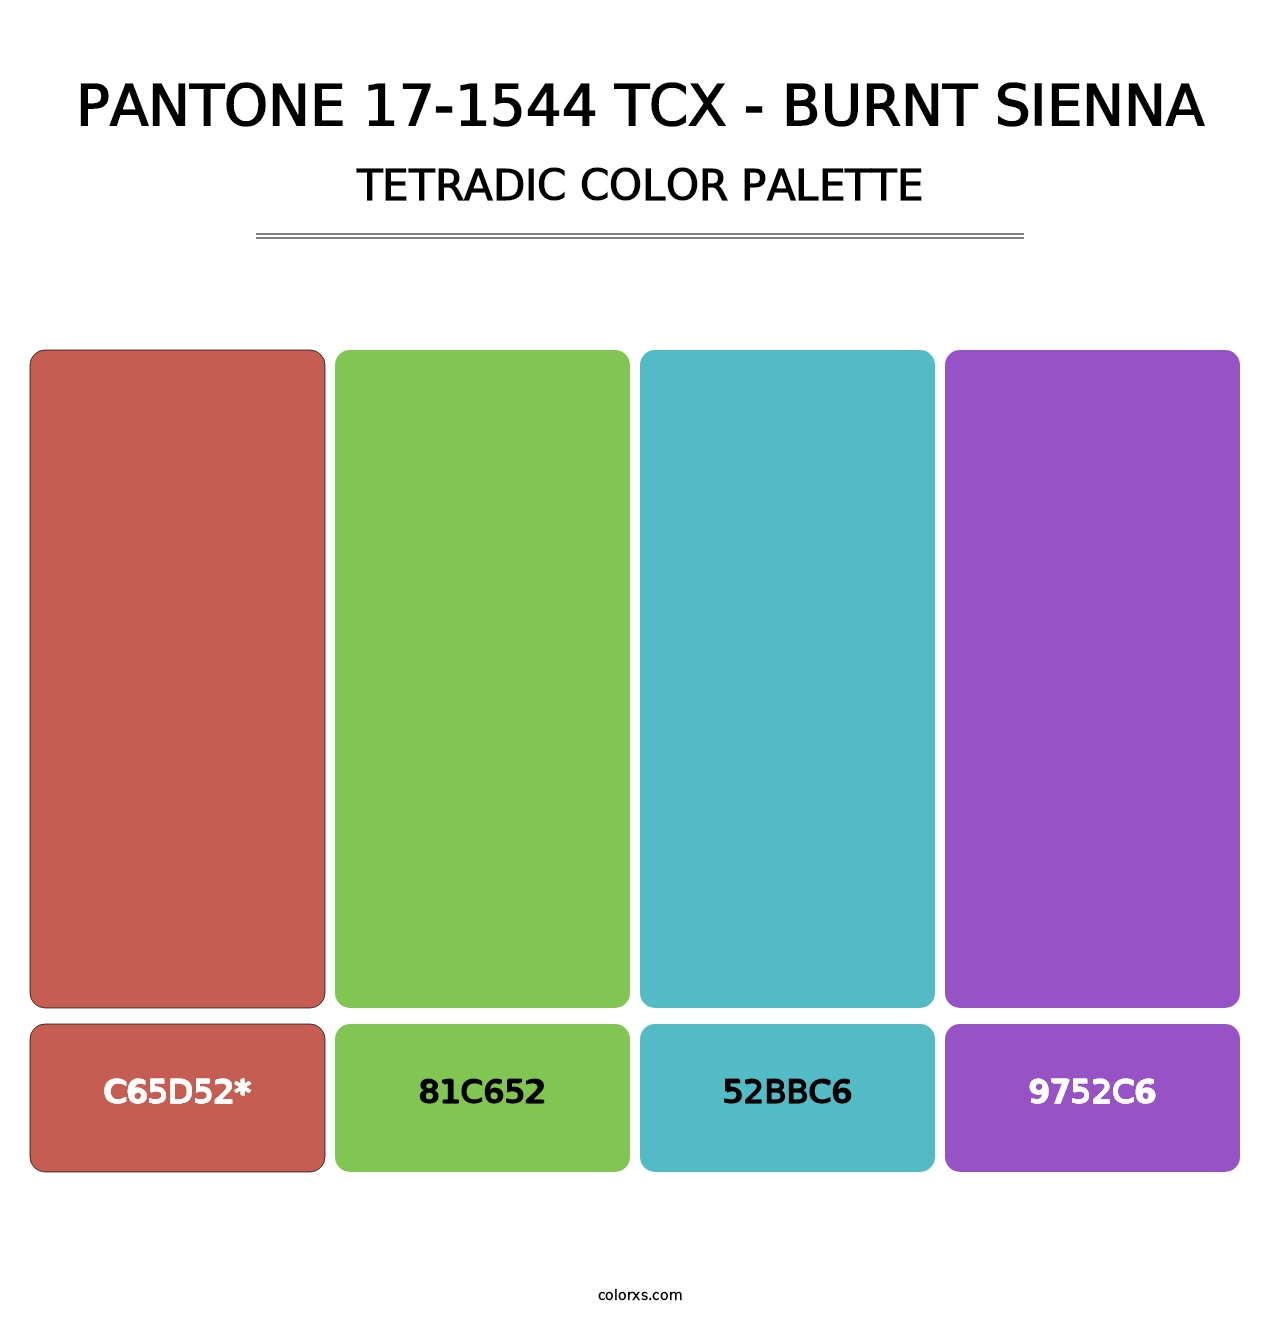 PANTONE 17-1544 TCX - Burnt Sienna - Tetradic Color Palette